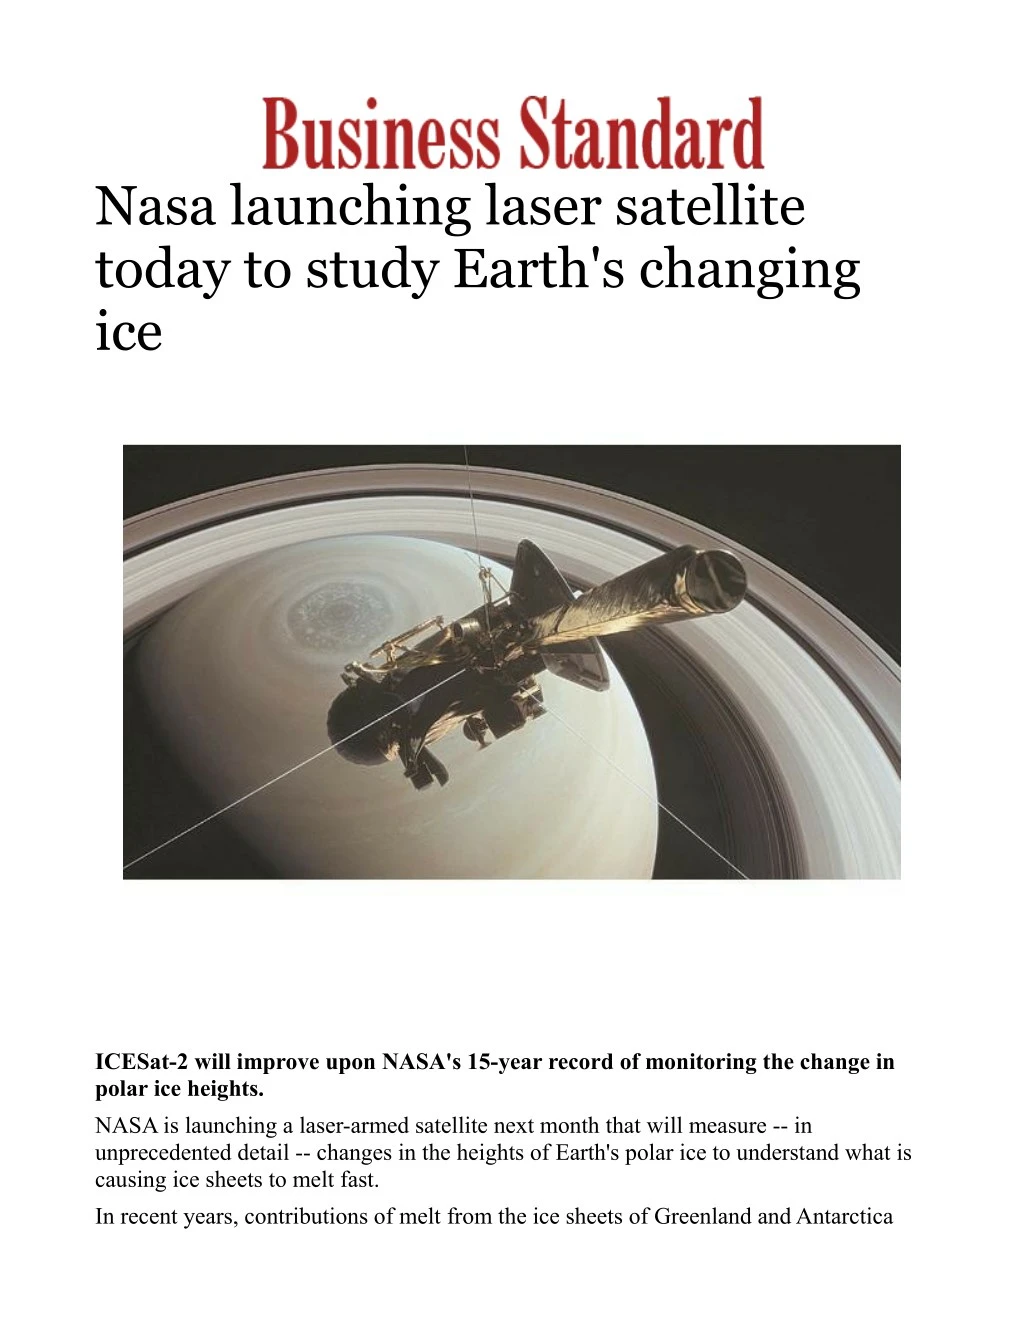 nasa launching laser satellite today to study